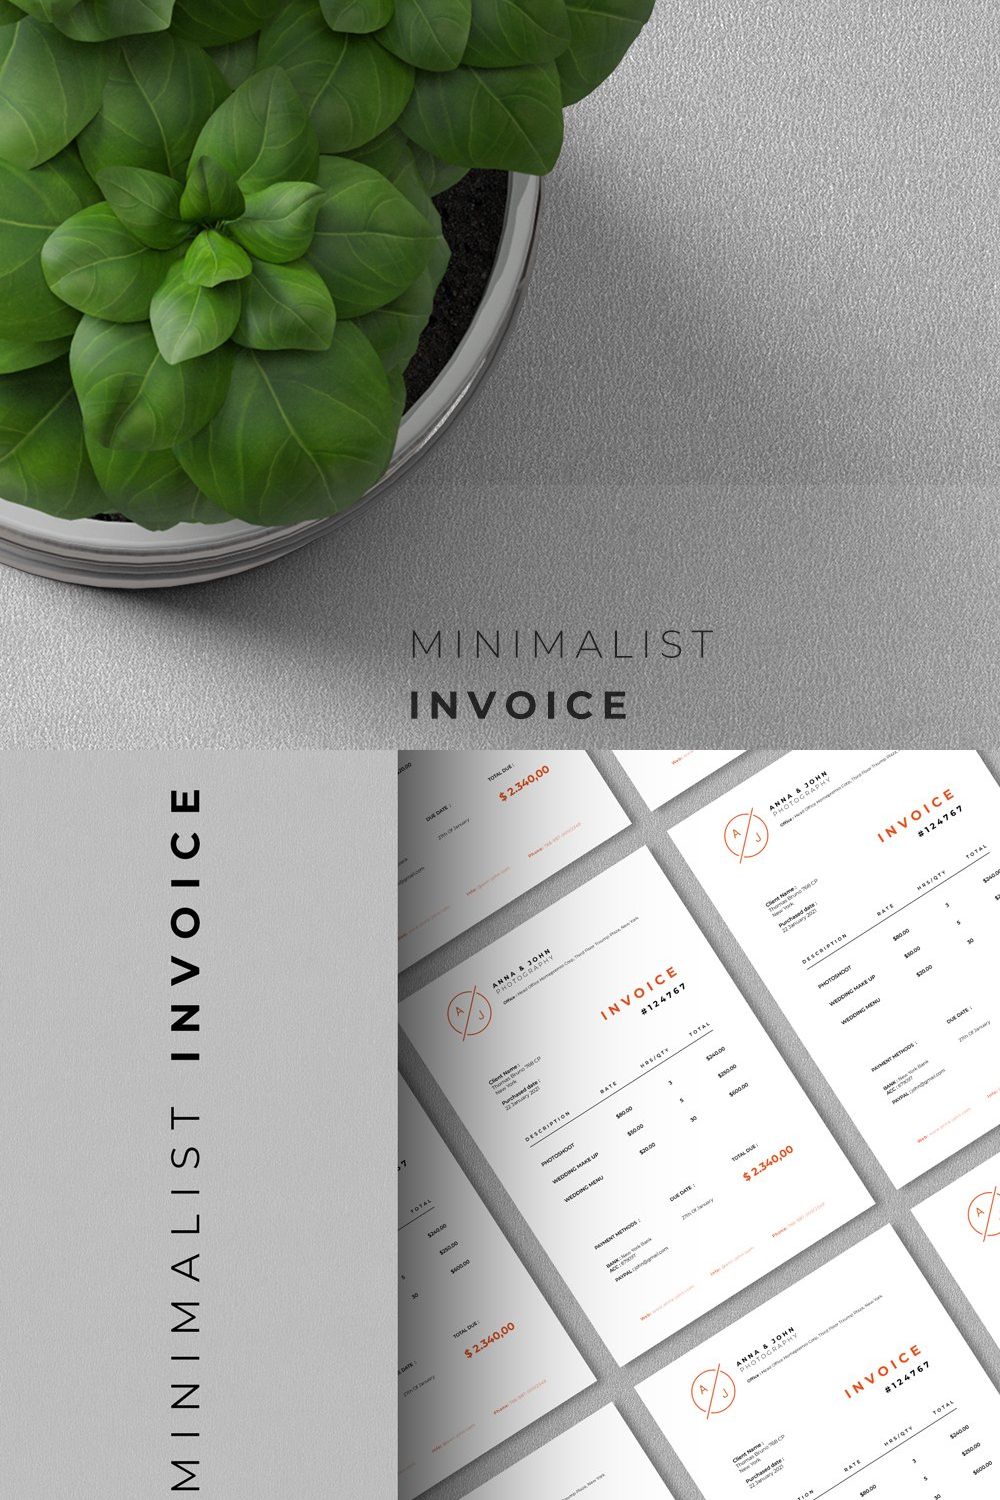 Minimalist Invoice pinterest preview image.